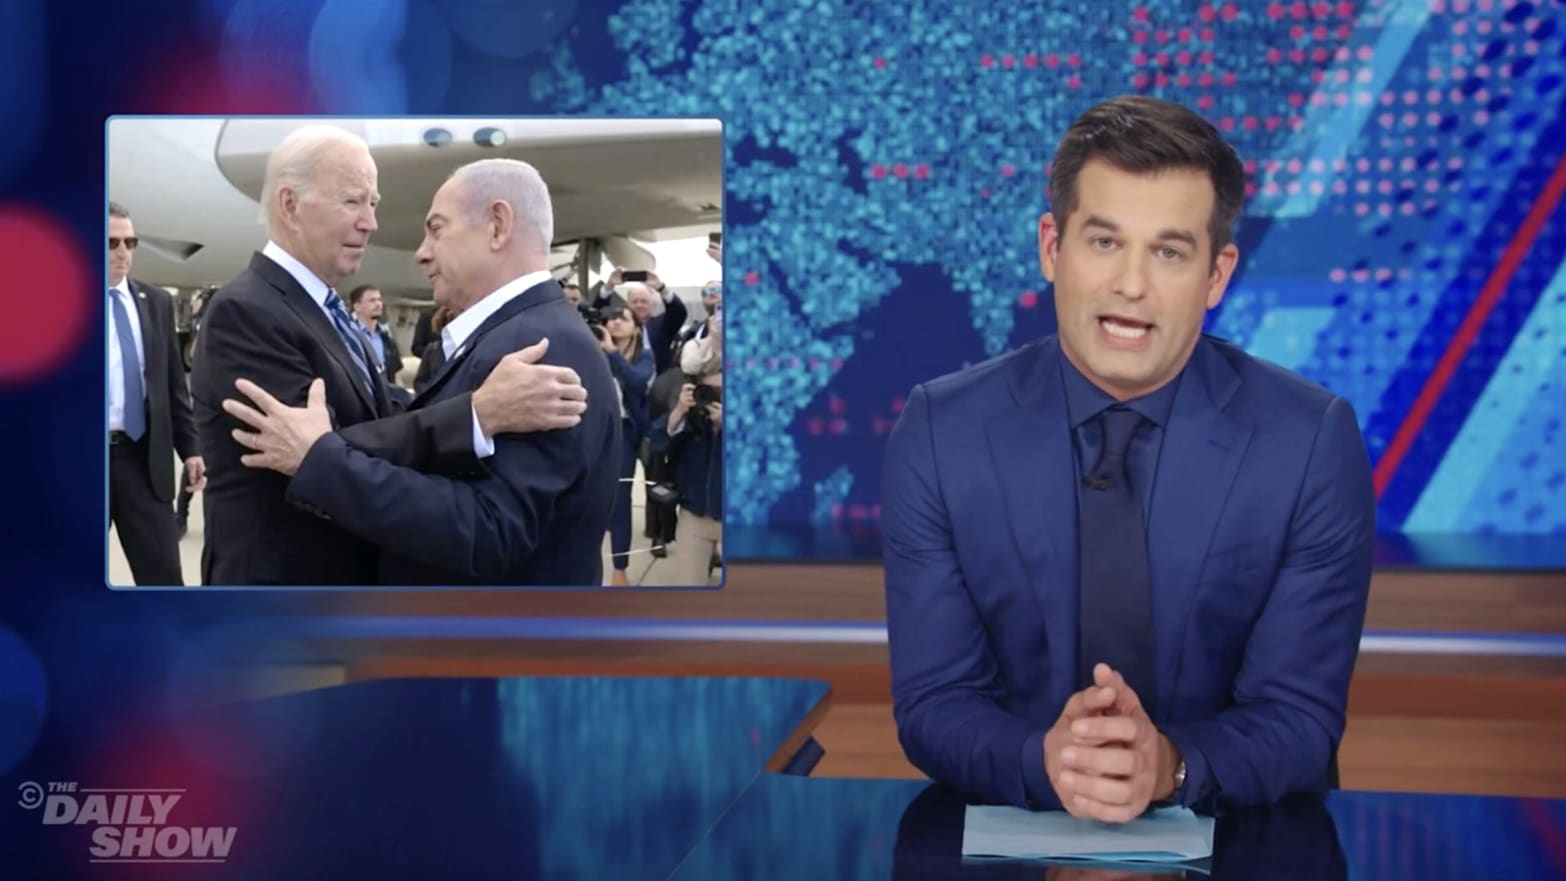 Daily Show guest host Michael Kosta with Joe Biden and Benjamin Netanyahu